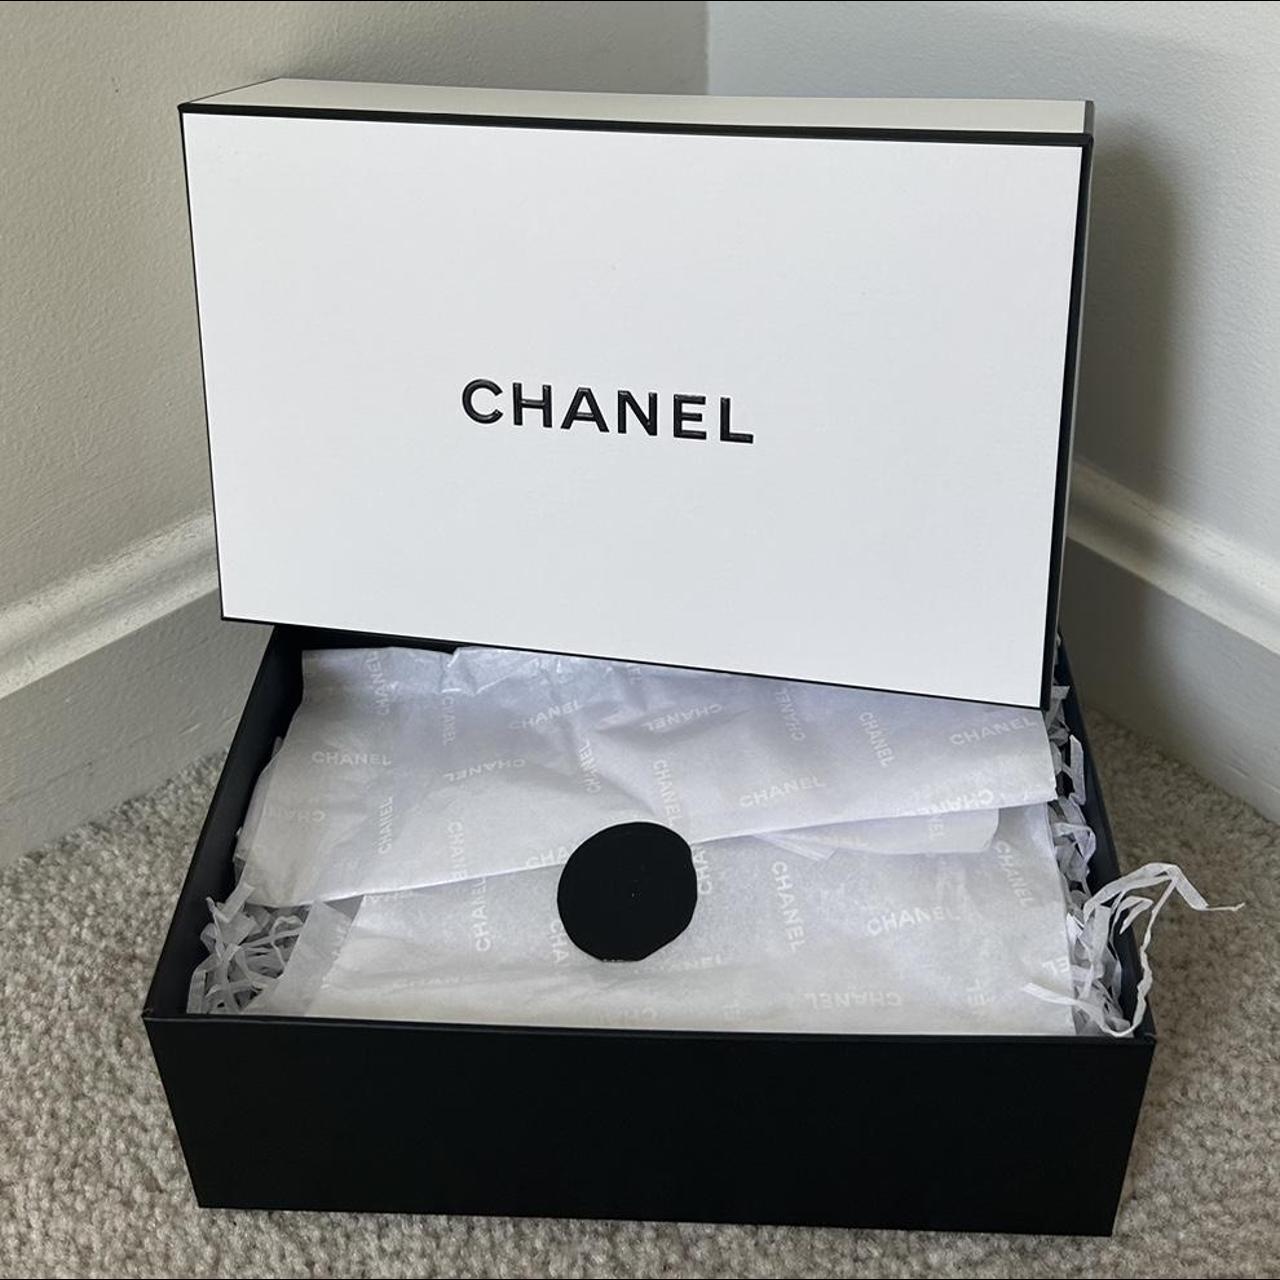 CHANEL White Black Gift Box Chanel Branded Tissue Paper 8.75 x 8.75 x 4